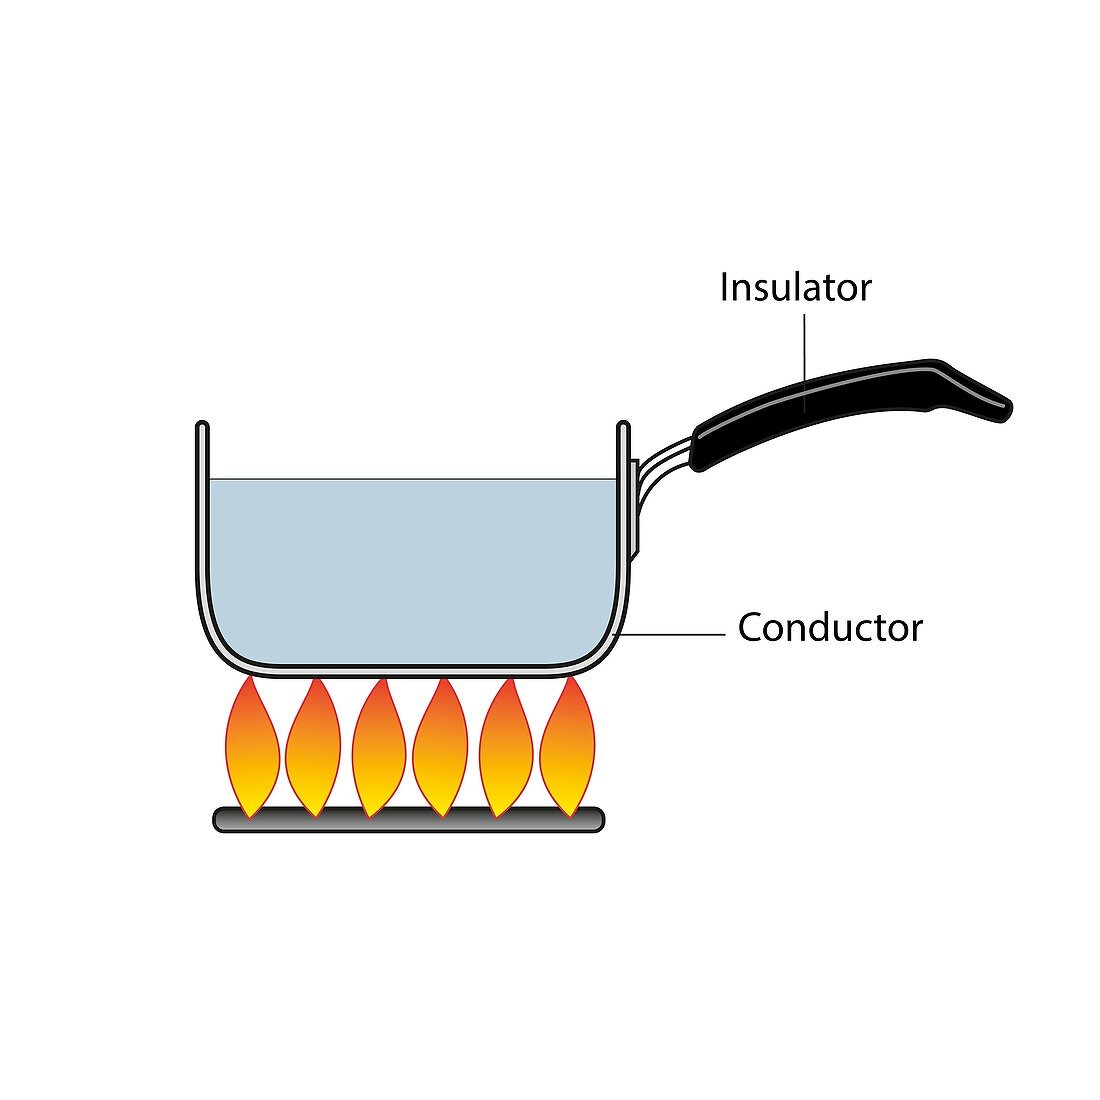 Conduction and insulation, illustration